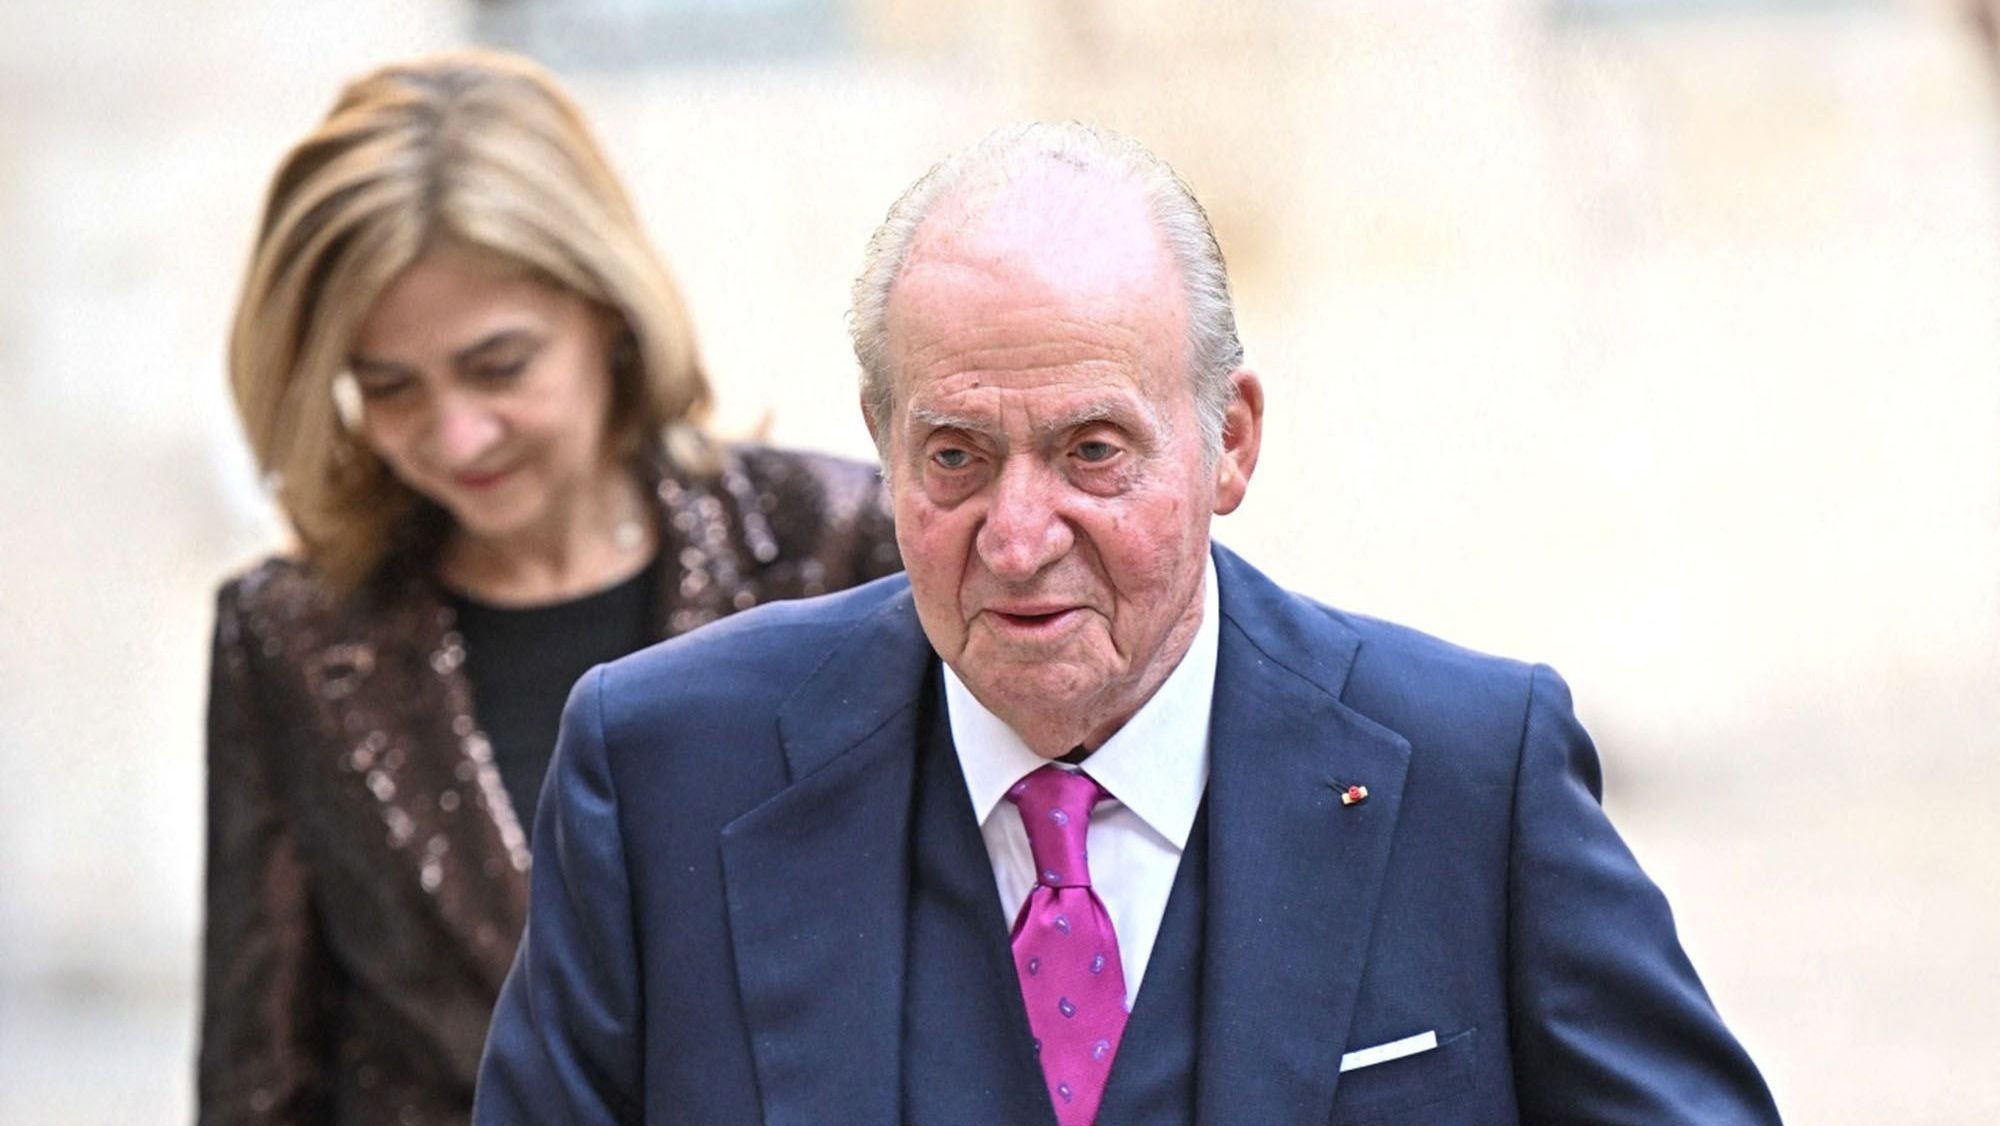 Joan Carles I ha desviat diners a la reina Sofia per mantenir familiars